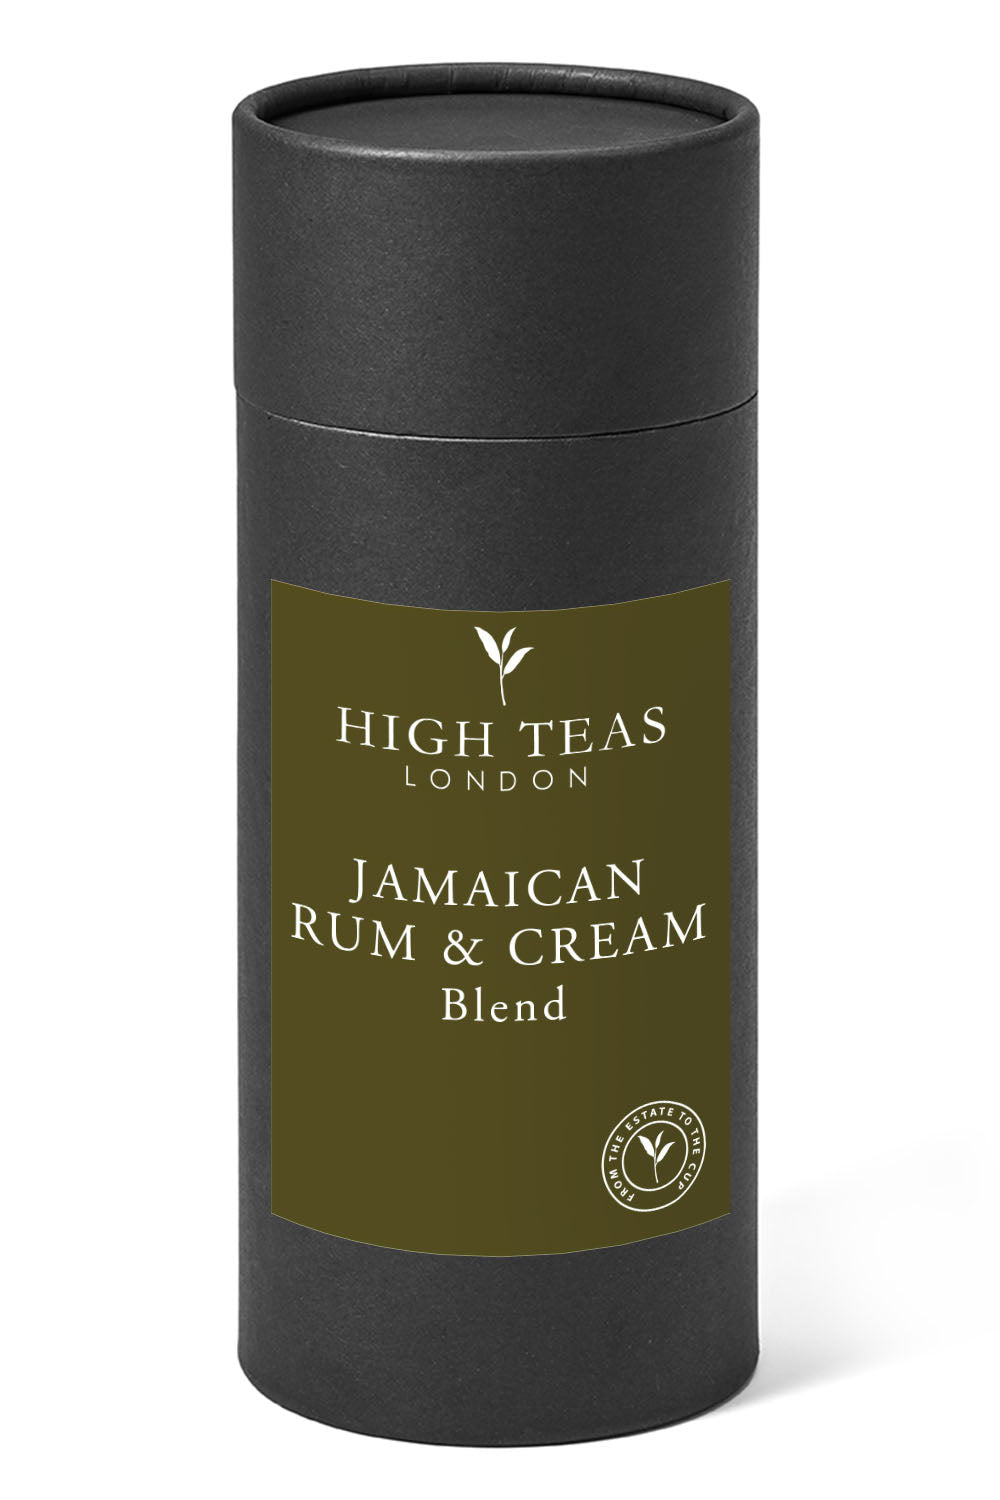 Jamaican Rum and Cream-150g gift-Loose Leaf Tea-High Teas